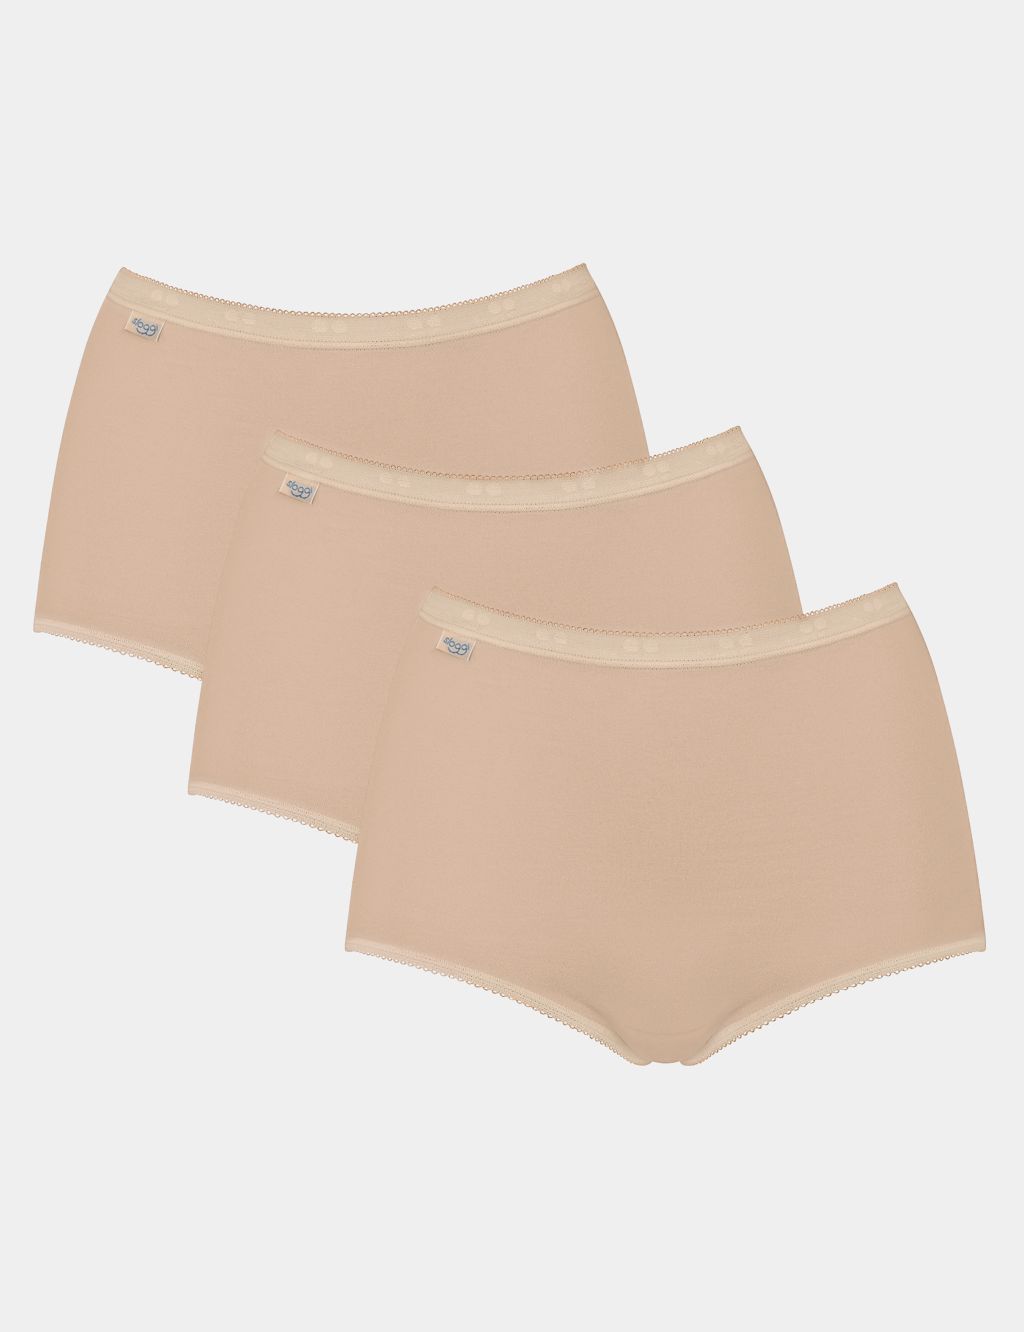 ENVOUS Boyshorts Panties for Women Seamless Soft Boy Shorts Underwear Short  Boxer Briefs Anti Chafing 3-Pack